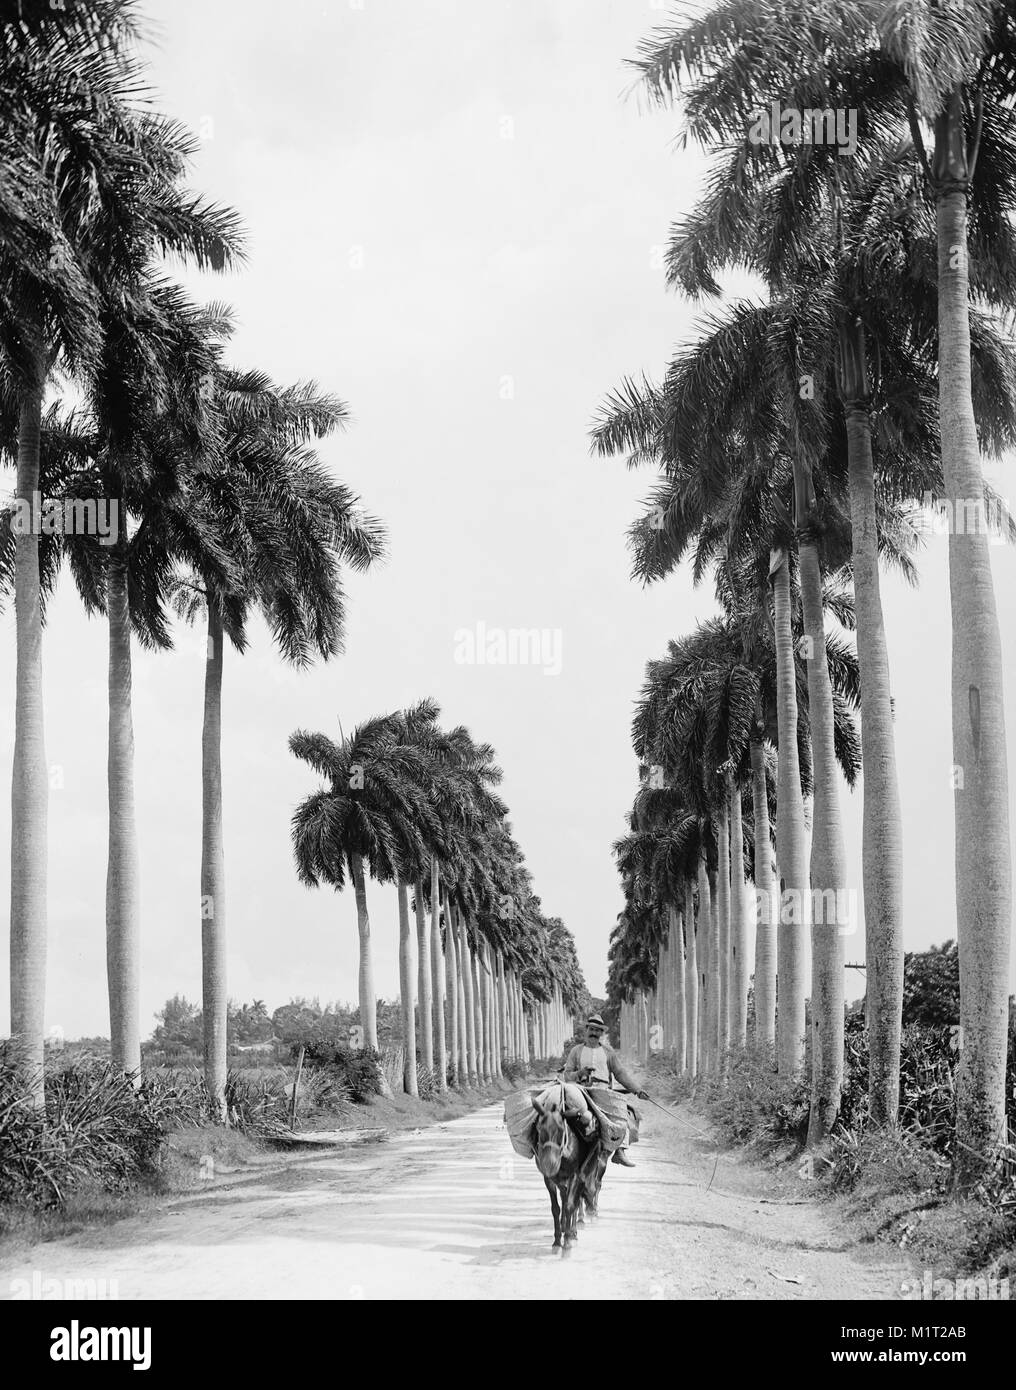 Man on Donkey, Avenue of Palms, Havana, Cuba, Detroit Publishing Company, 1903 Stock Photo